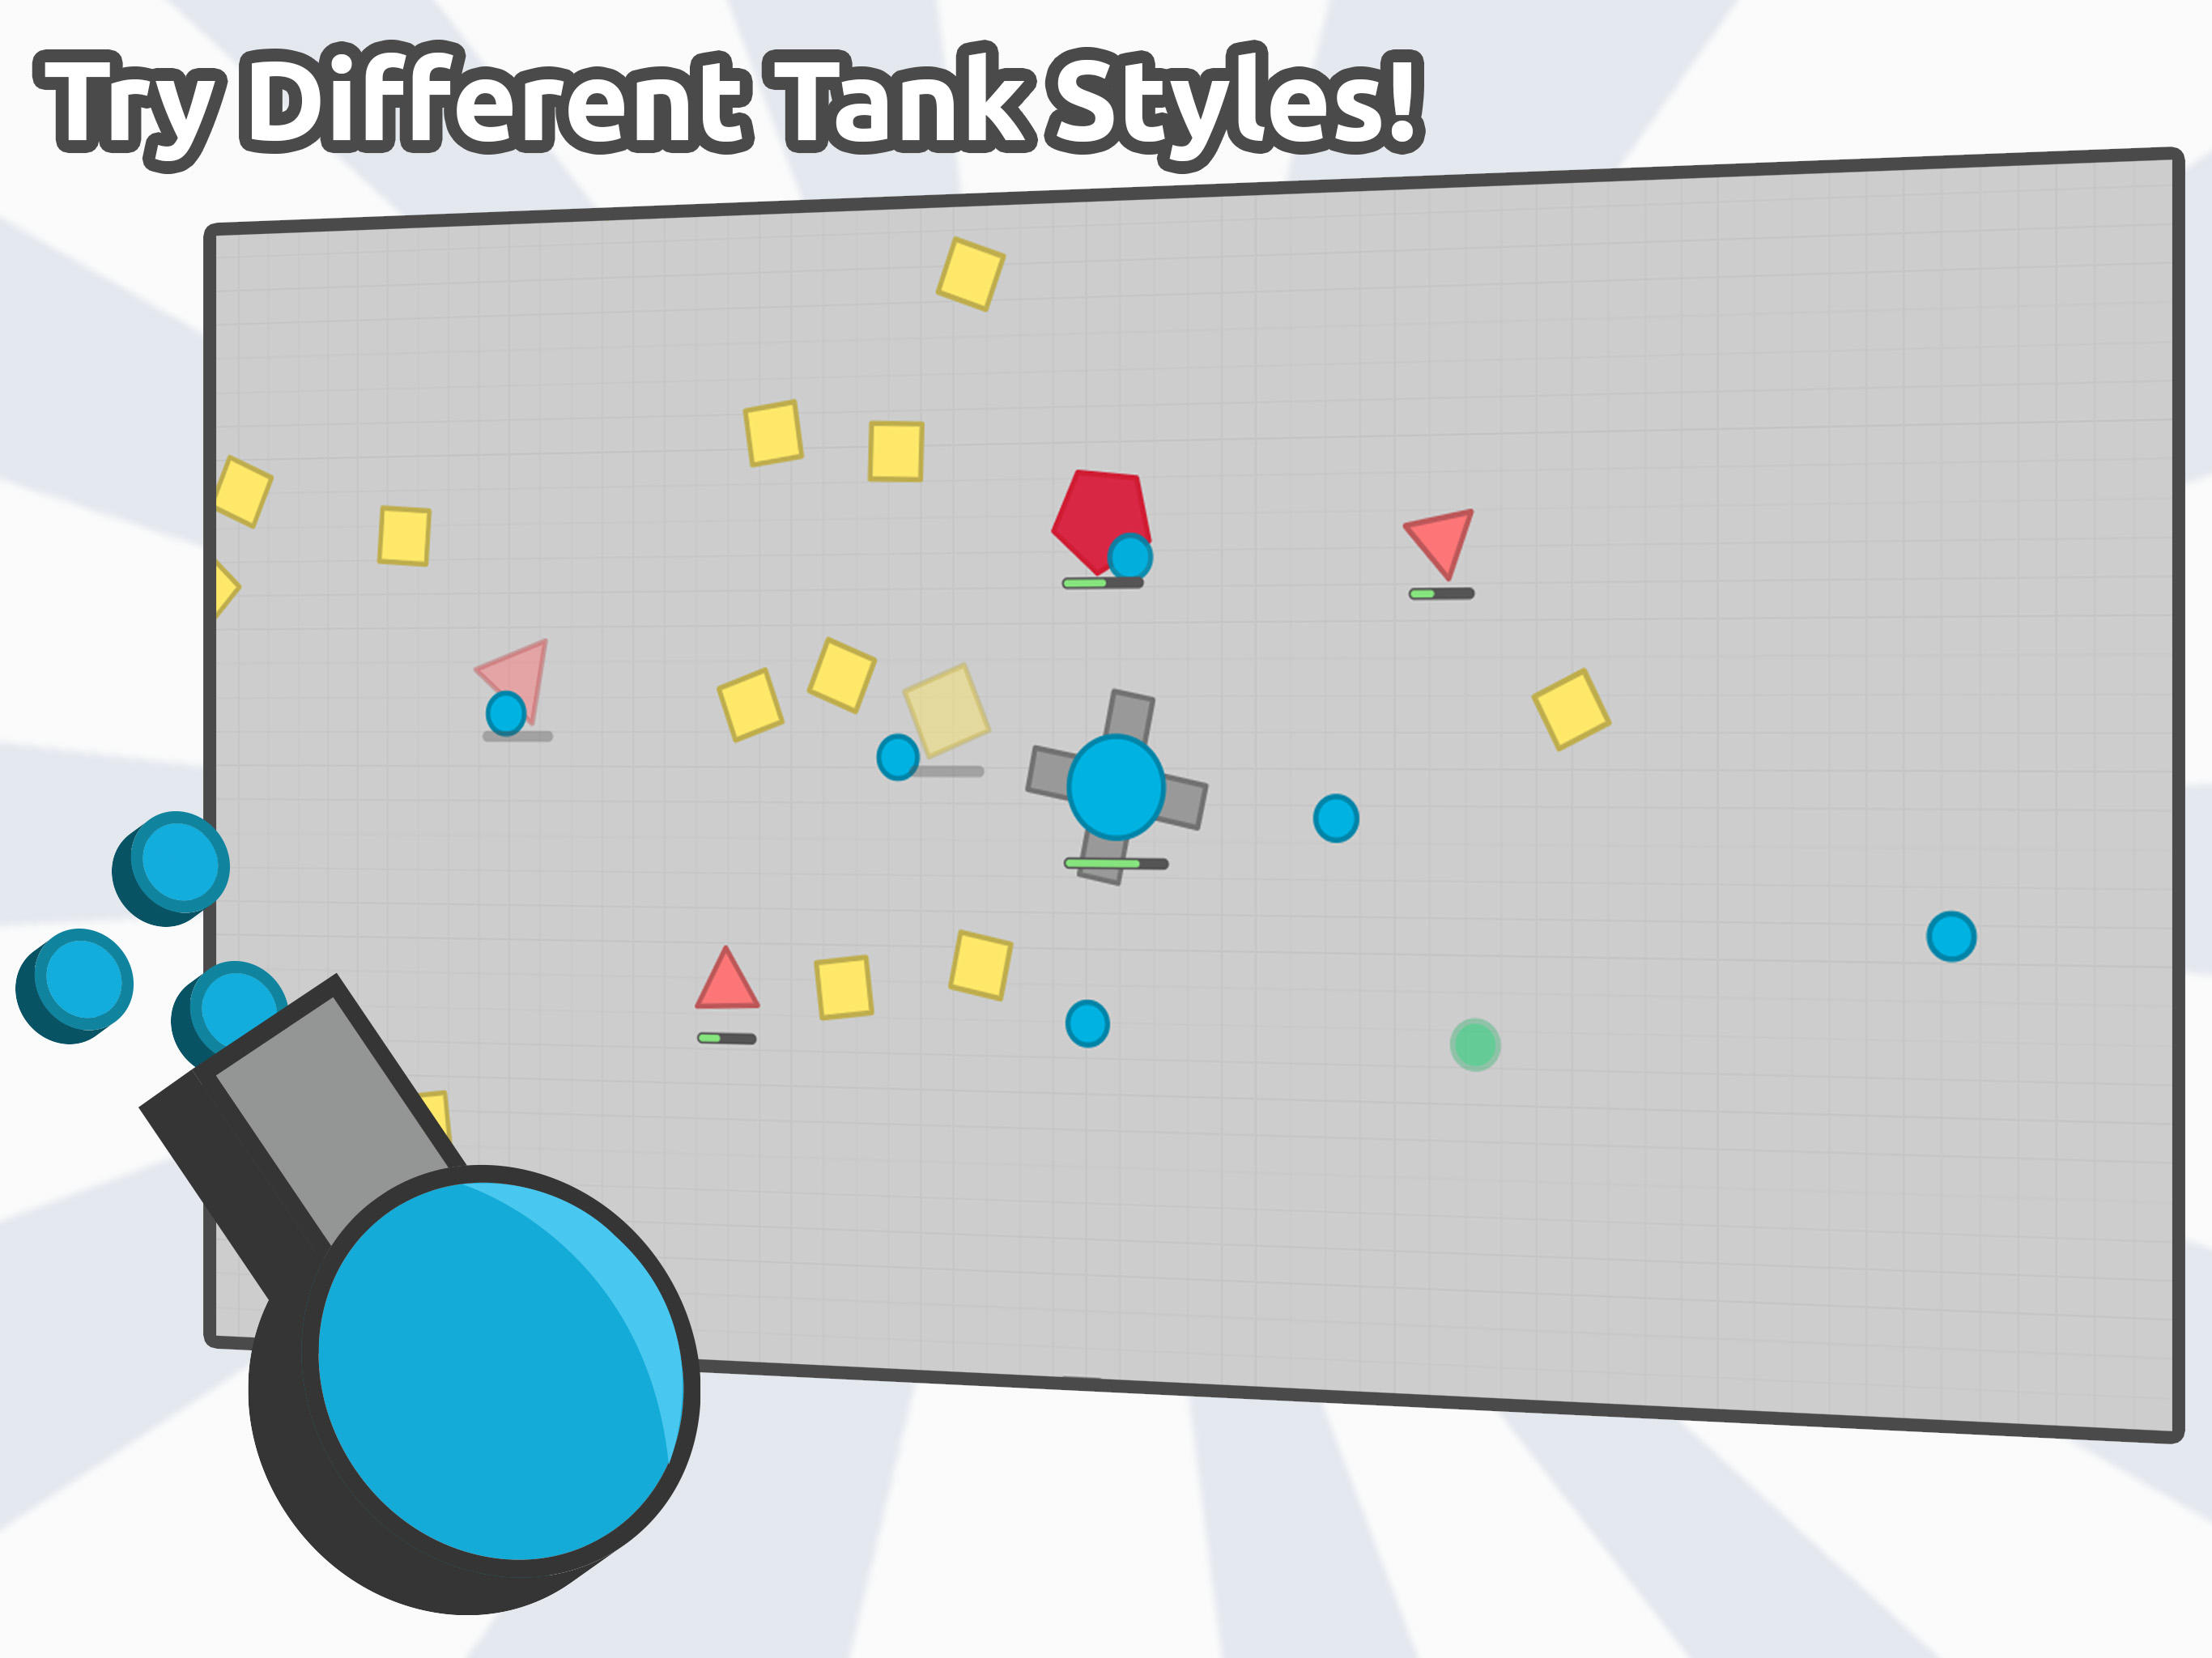 Diep.io2 showing all new tanks + dev tanks 